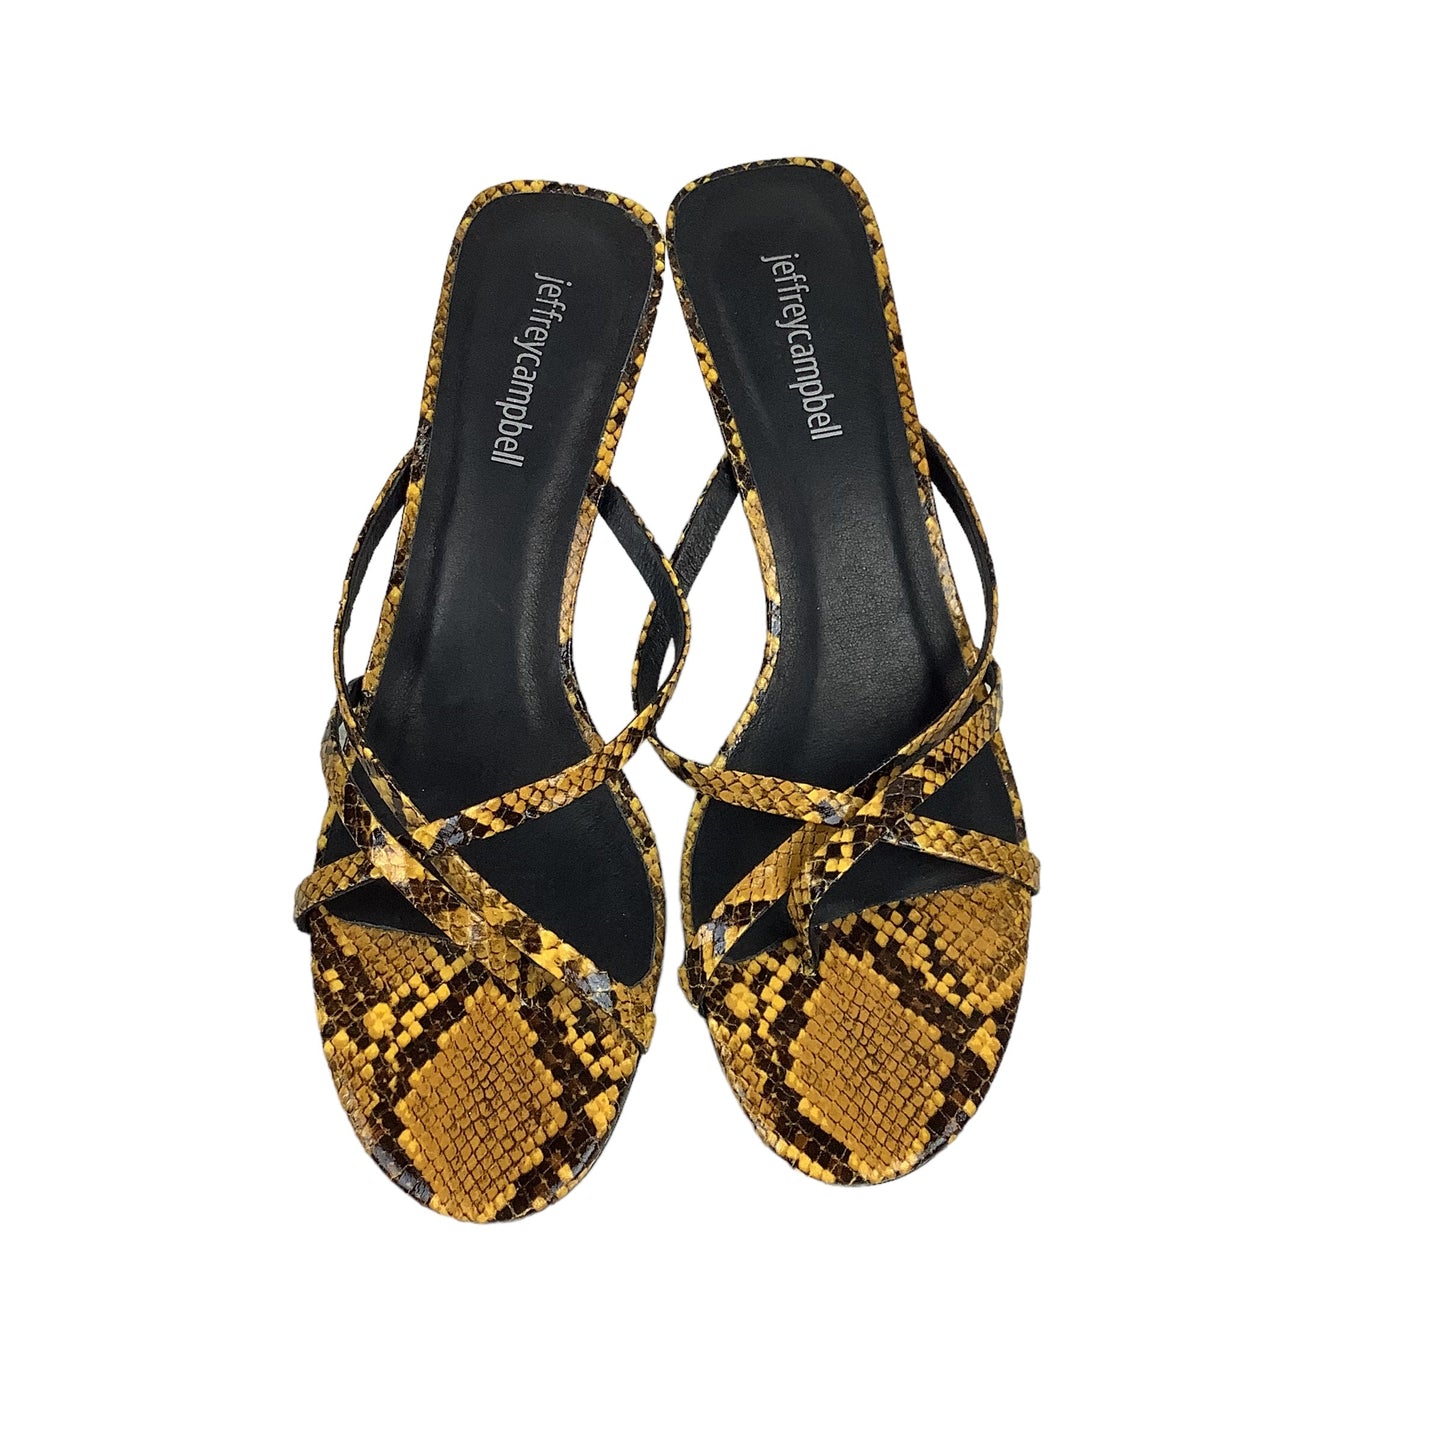 Sandals Heels Stiletto By Jeffery Campbell  Size: 9